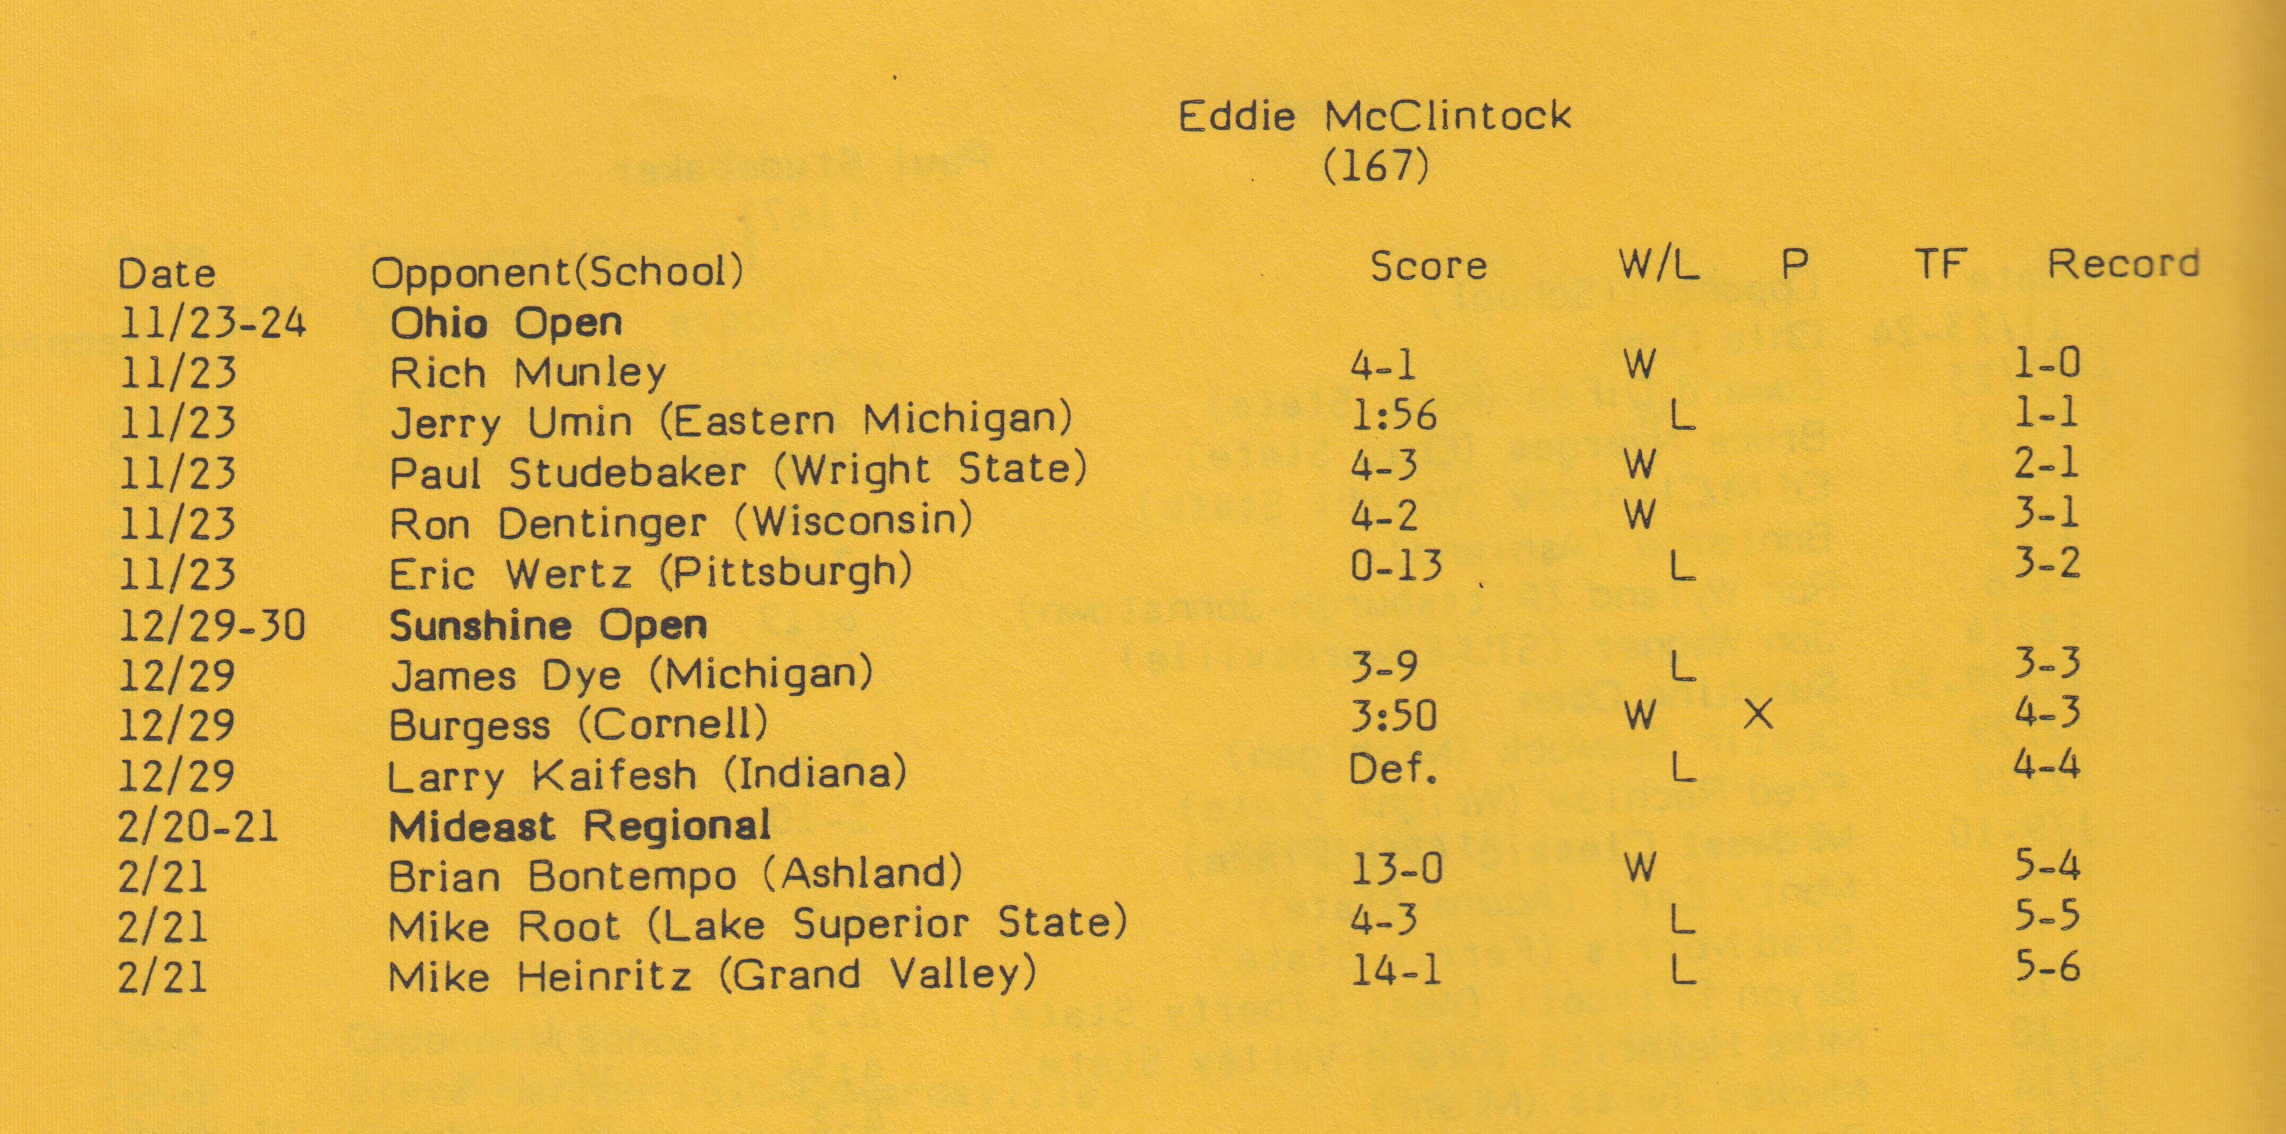 McClintock's wrestling results, 1986-1987